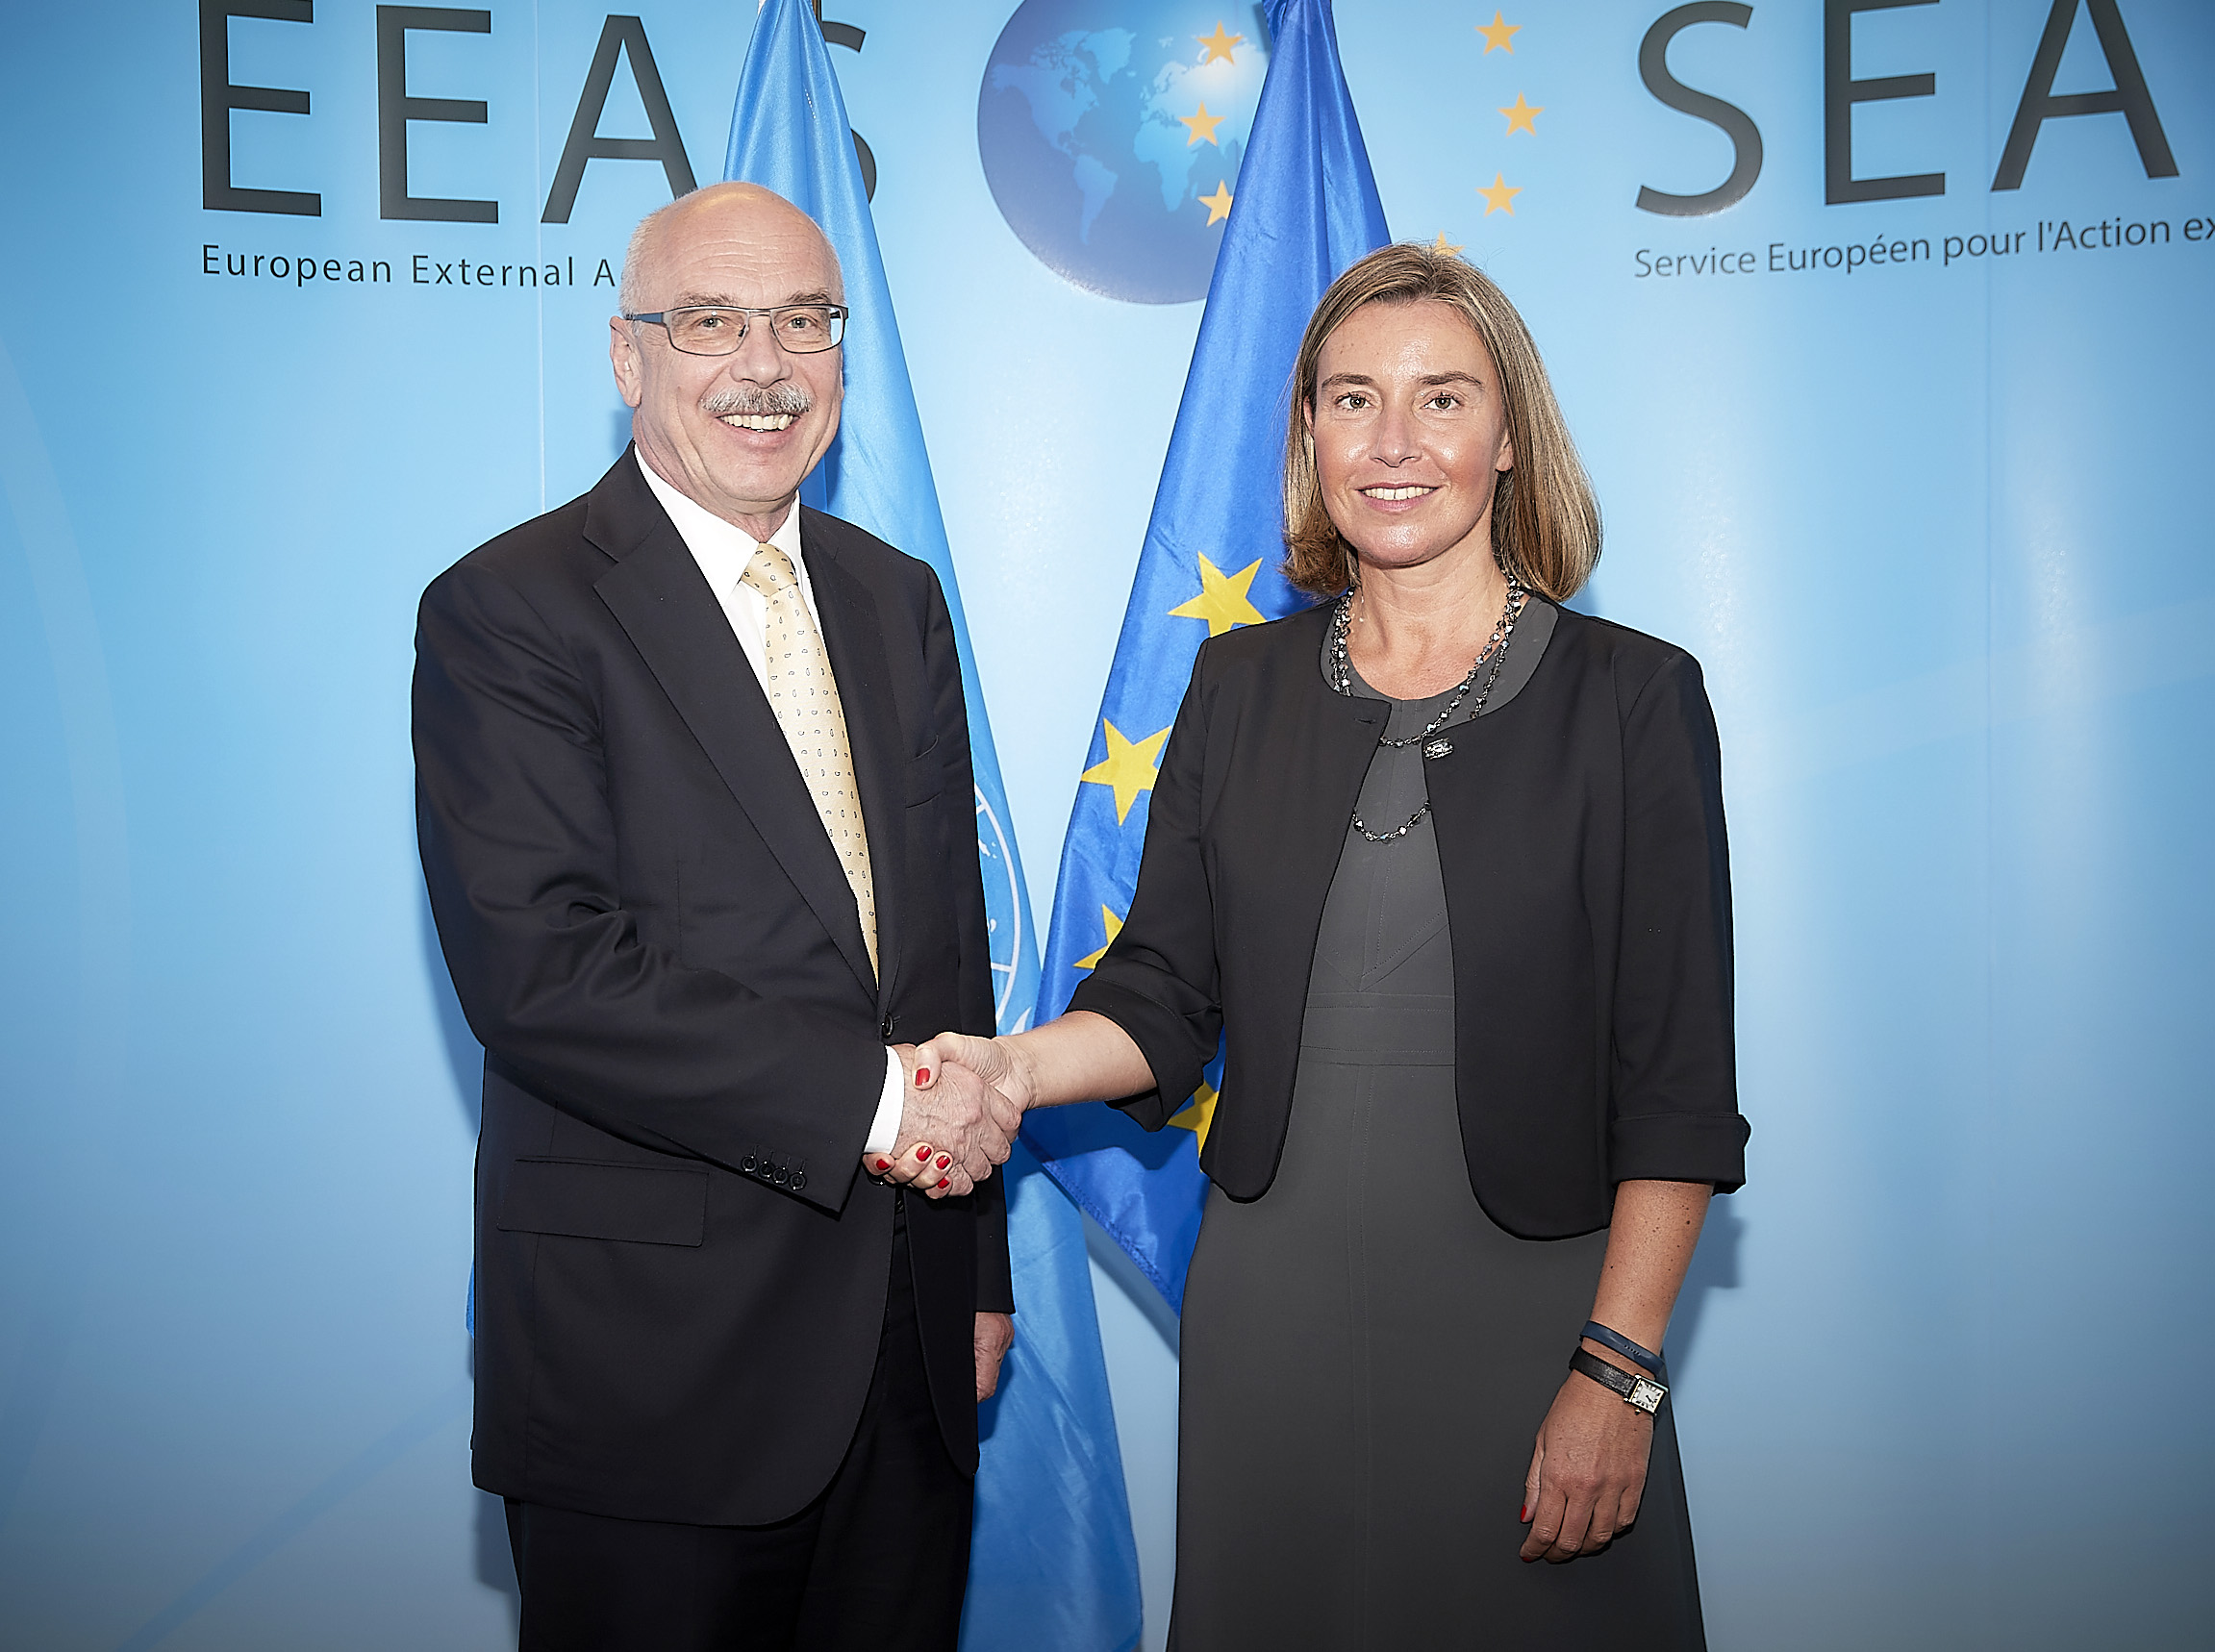 EU High Representative Federica Mogherini and UN Undersecretary General for Counter-Terrorism Vladimir Voronkov